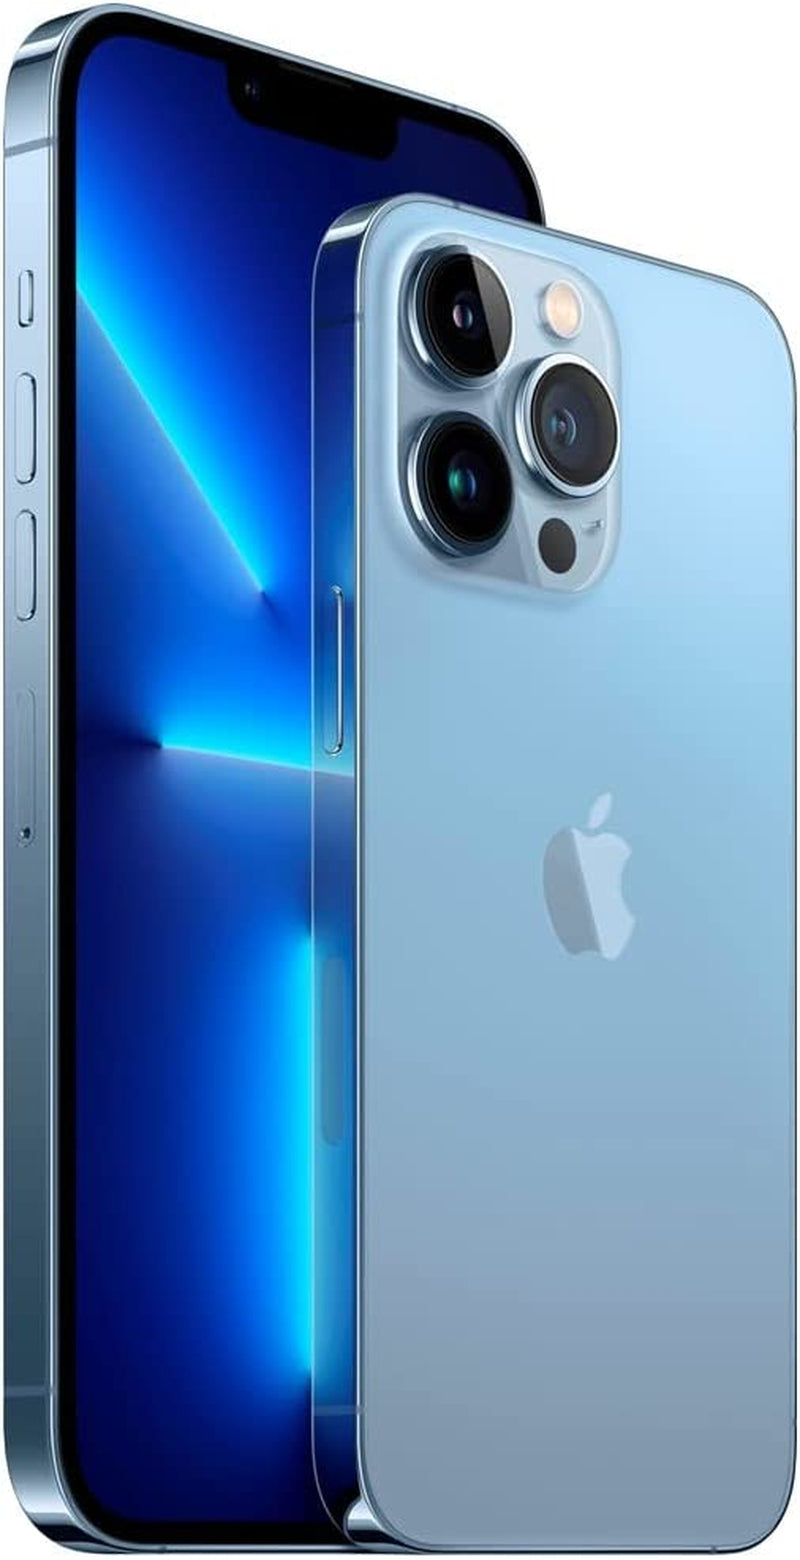 iPhone 13 Pro 128GB in Sierra Blue (Renewed) - Growing Apex Tech